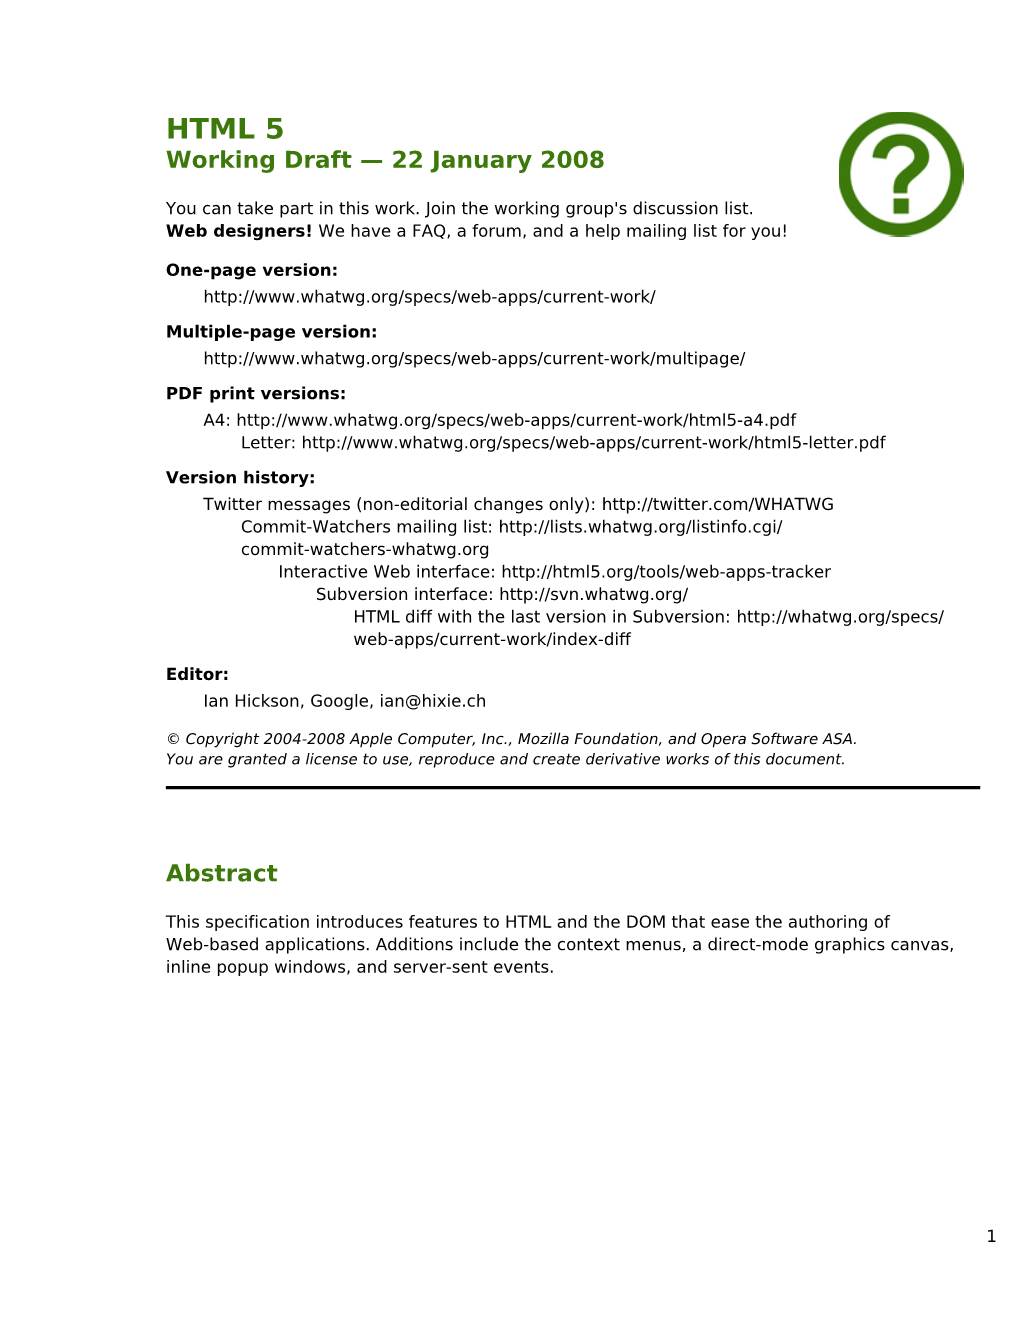 HTML 5 Working Draft — 22 January 2008